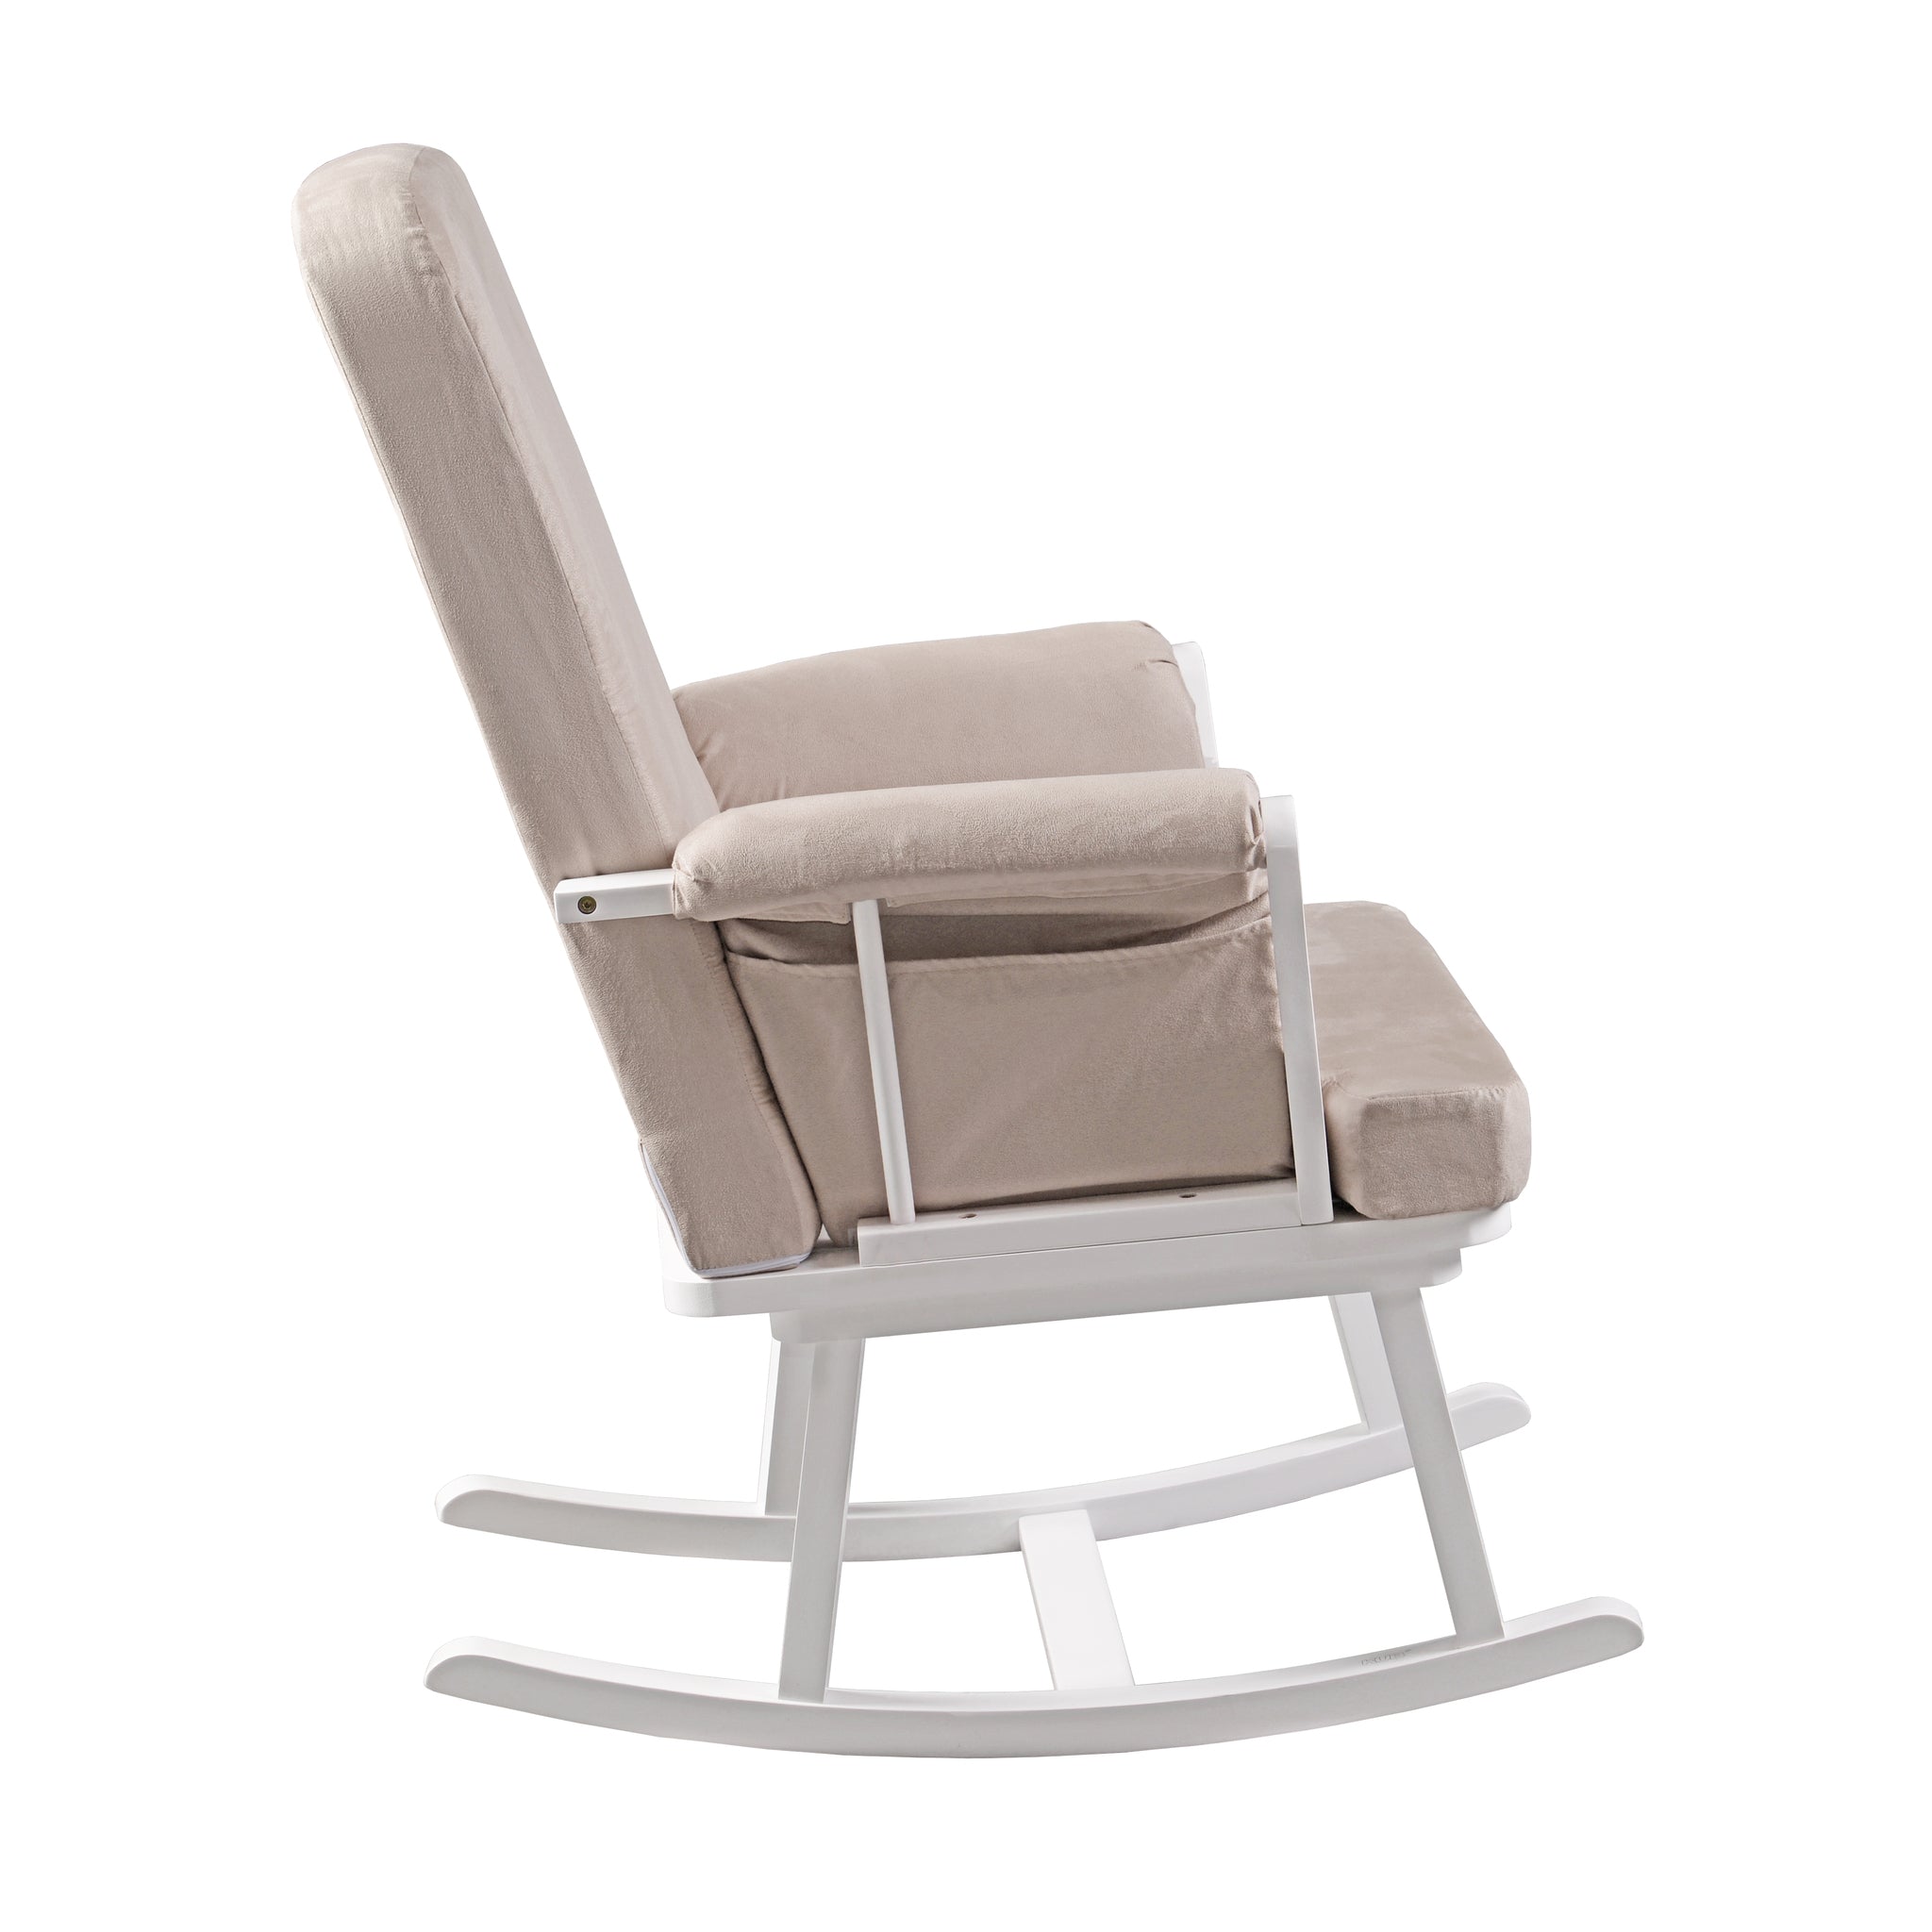 Haldon Nursing Rocking Chair White and Cream